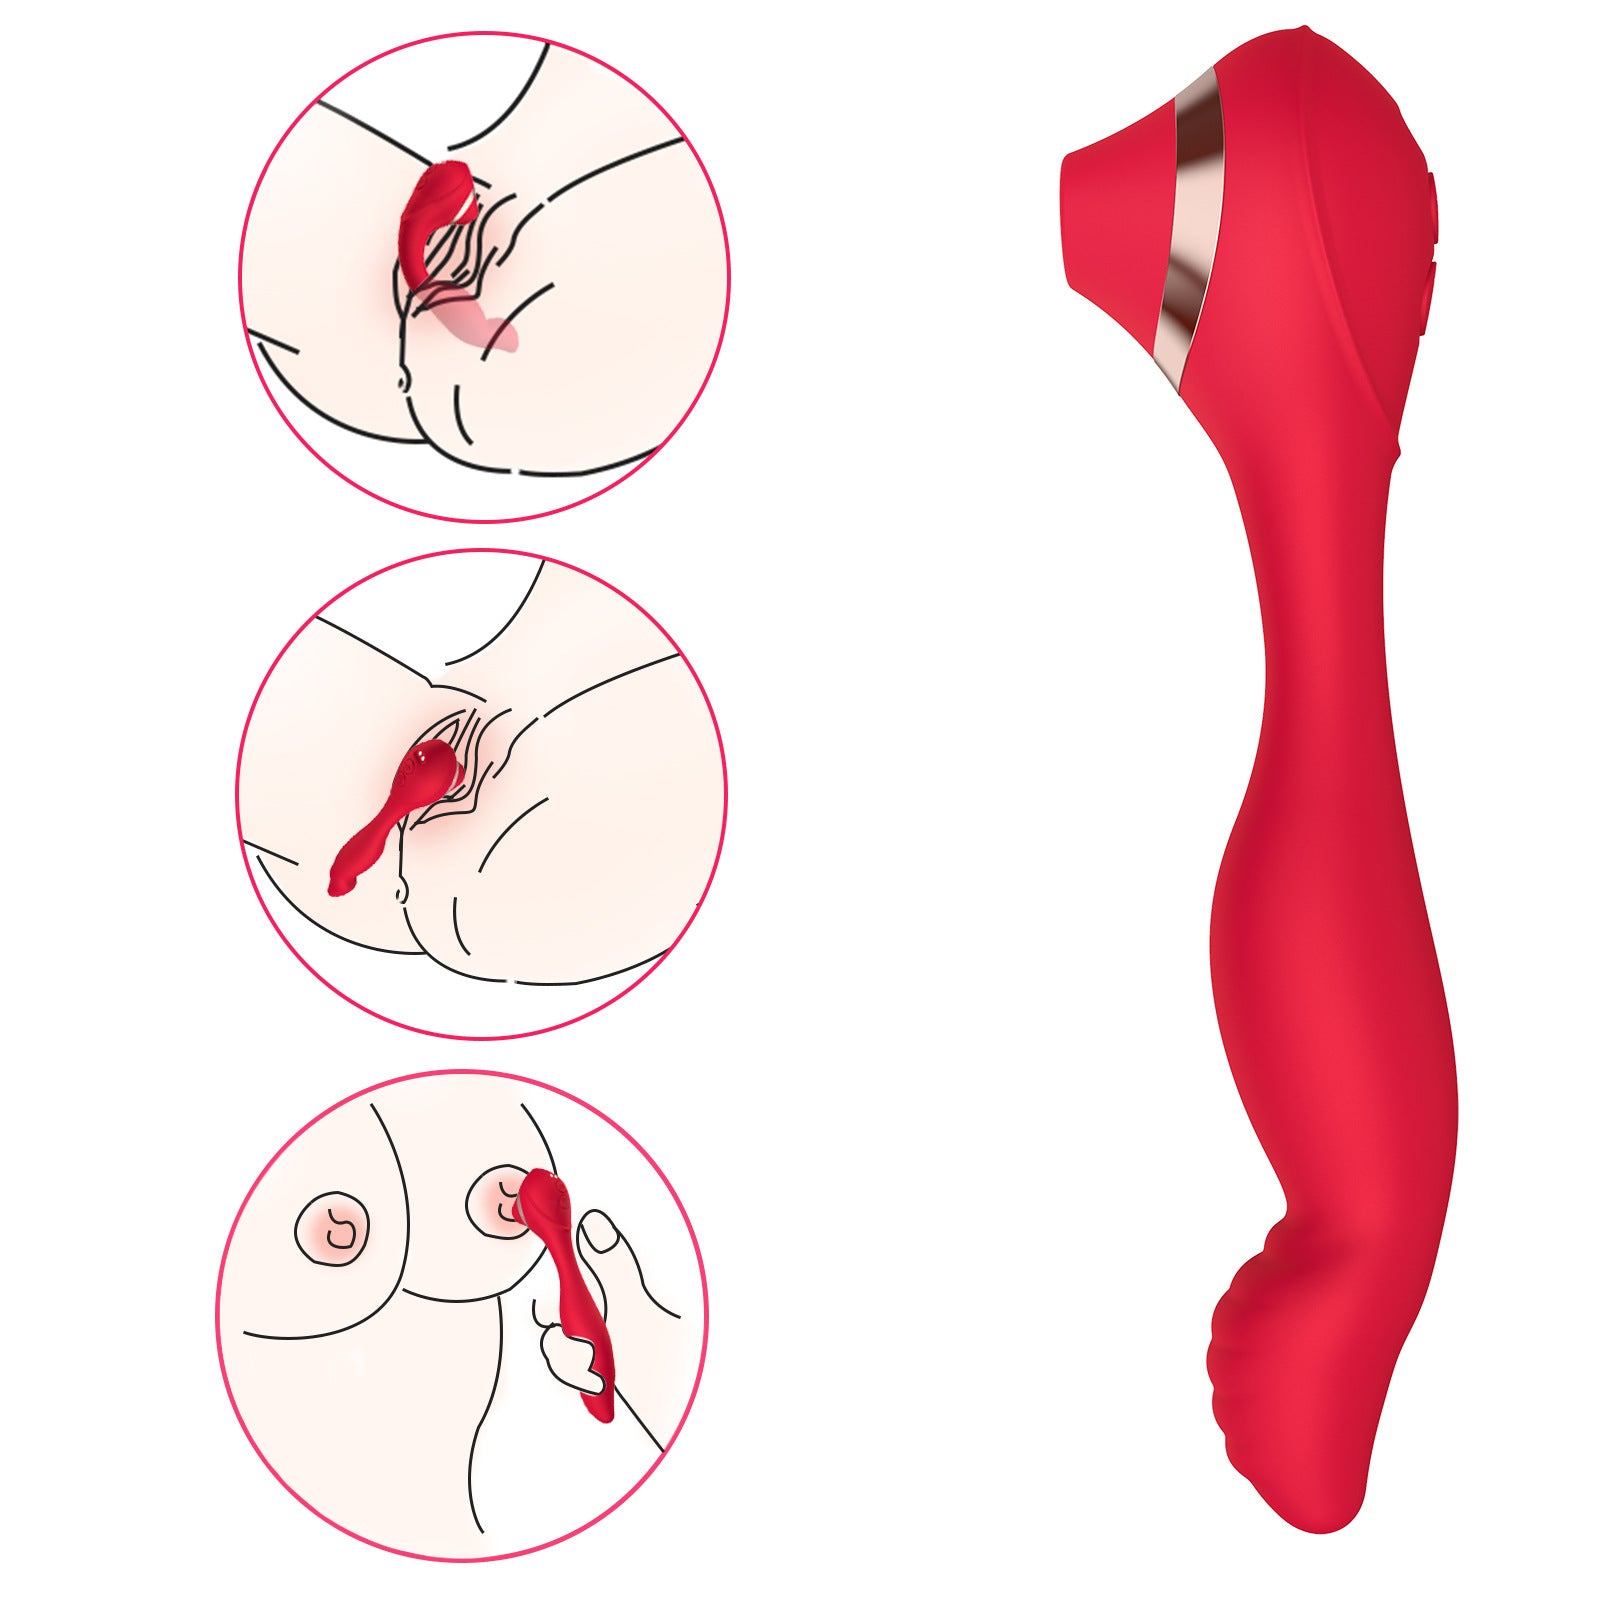 HC Magic Stick Clitoris Suction & Flexible Finger G-Spot Vibrator